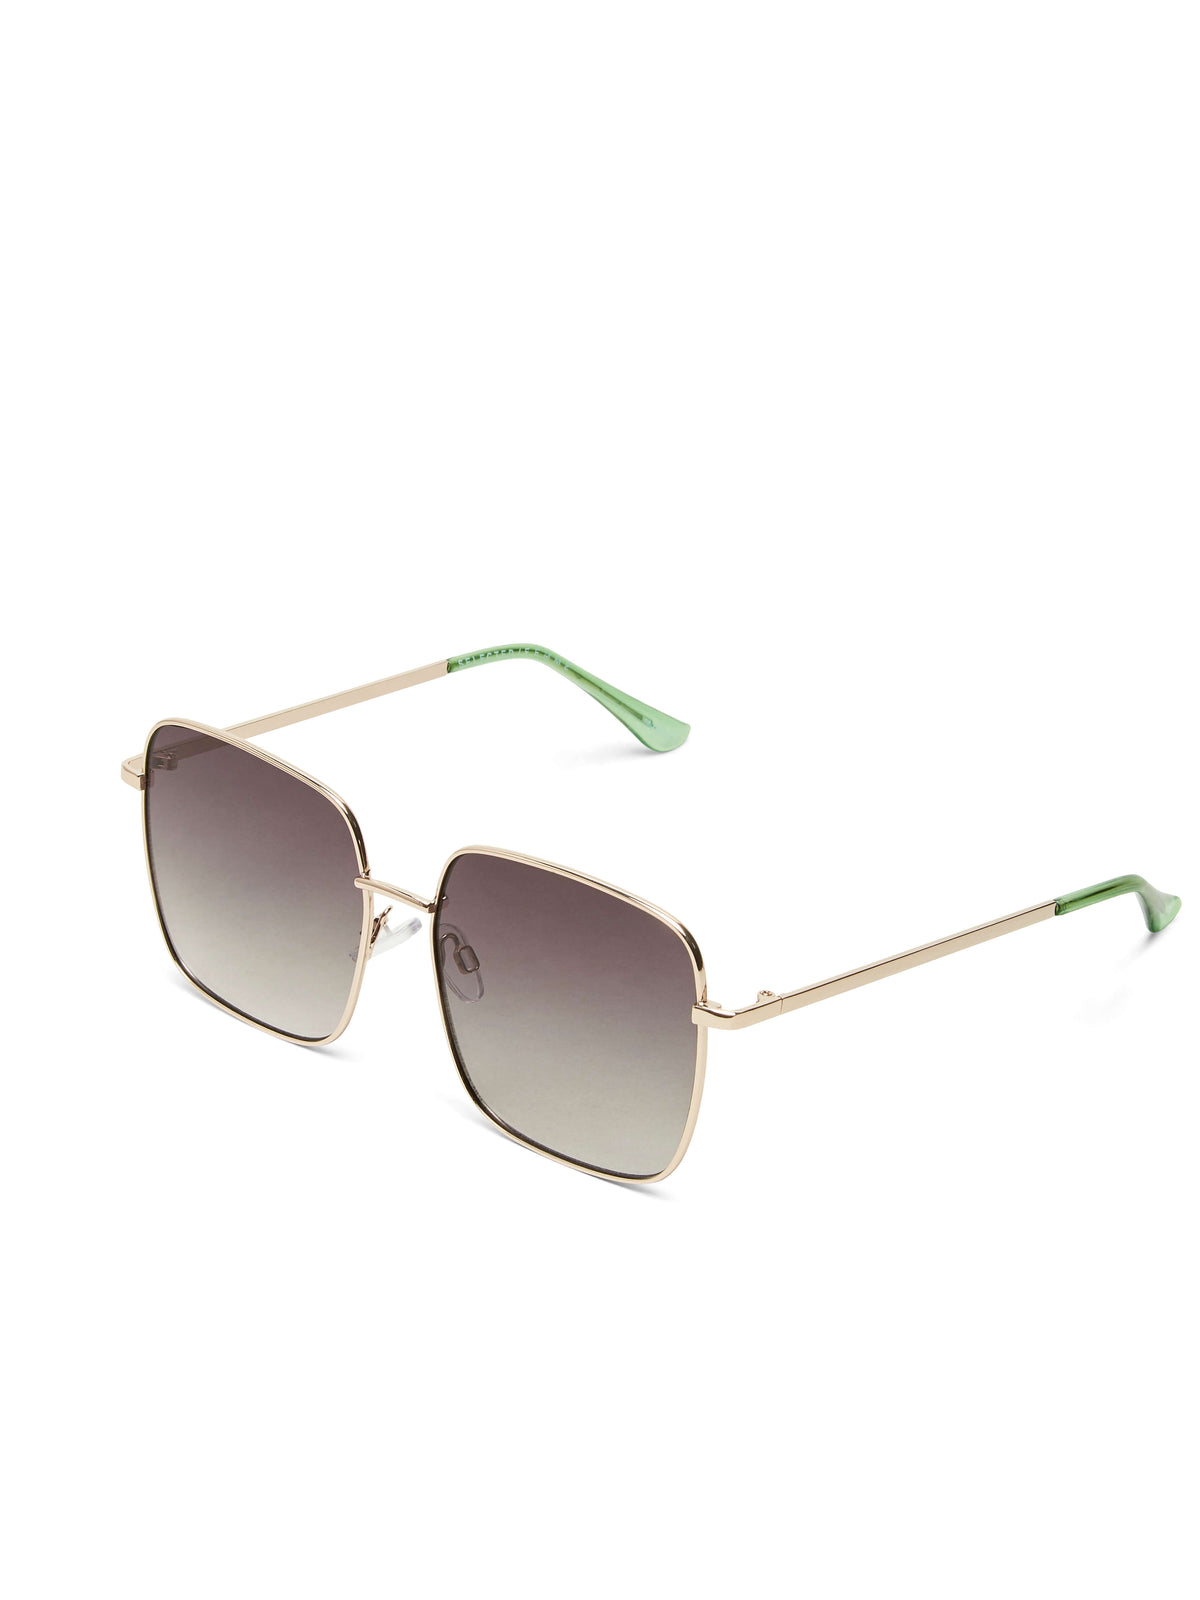 SLF Lovisa sunglasses in silver with square frame